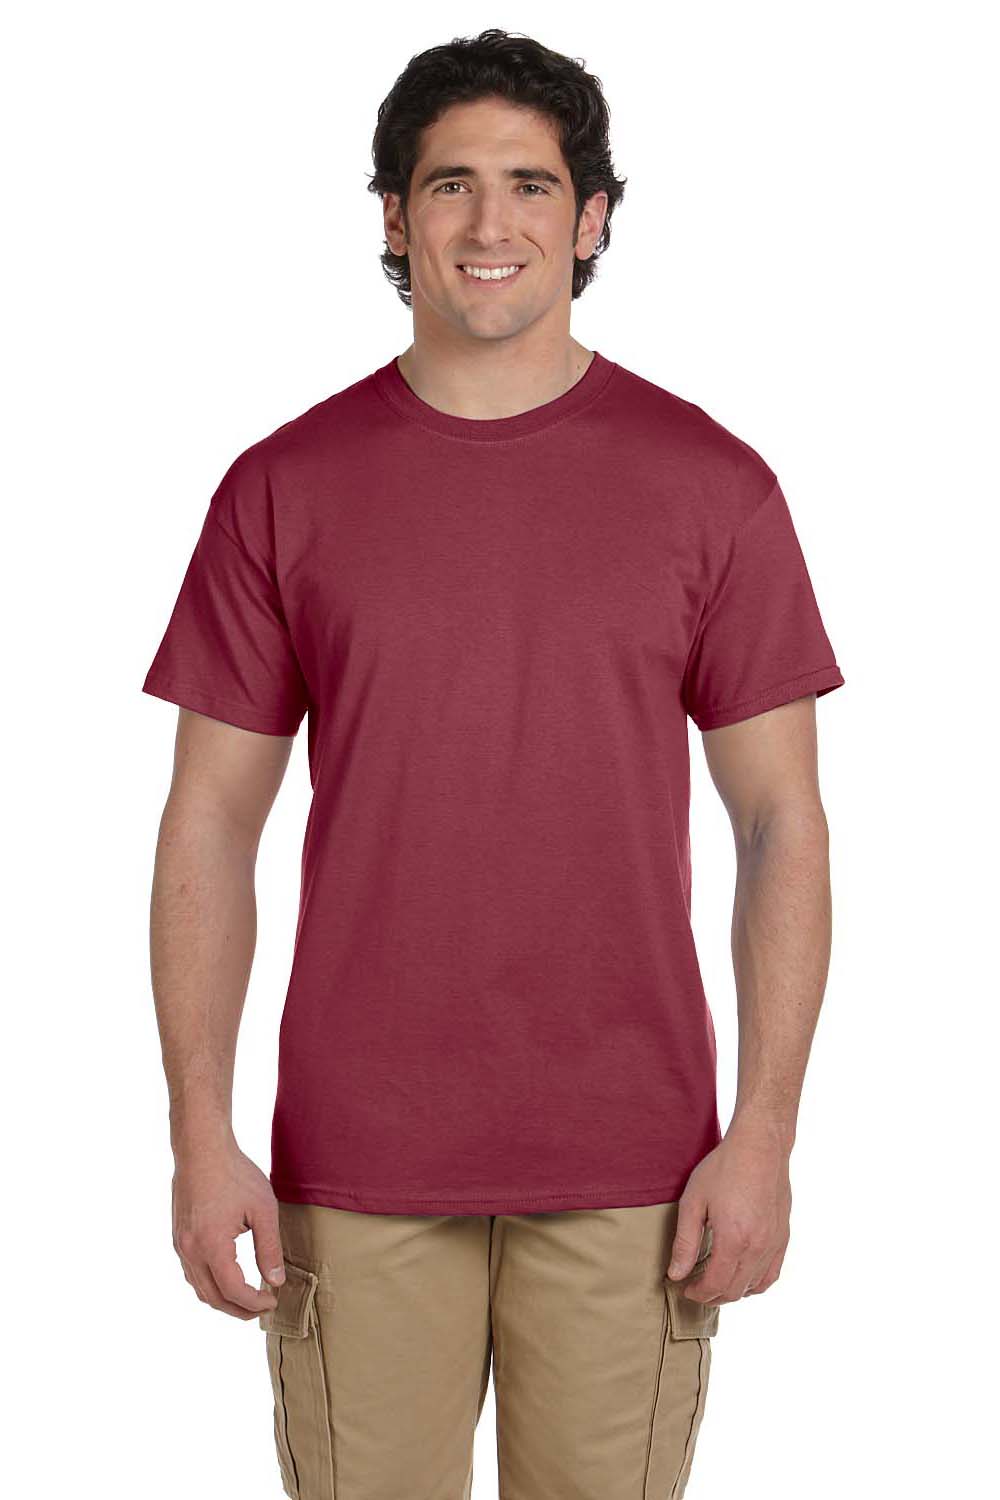 Hanes 5170 Mens EcoSmart Short Sleeve Crewneck T-Shirt Heather Red Front